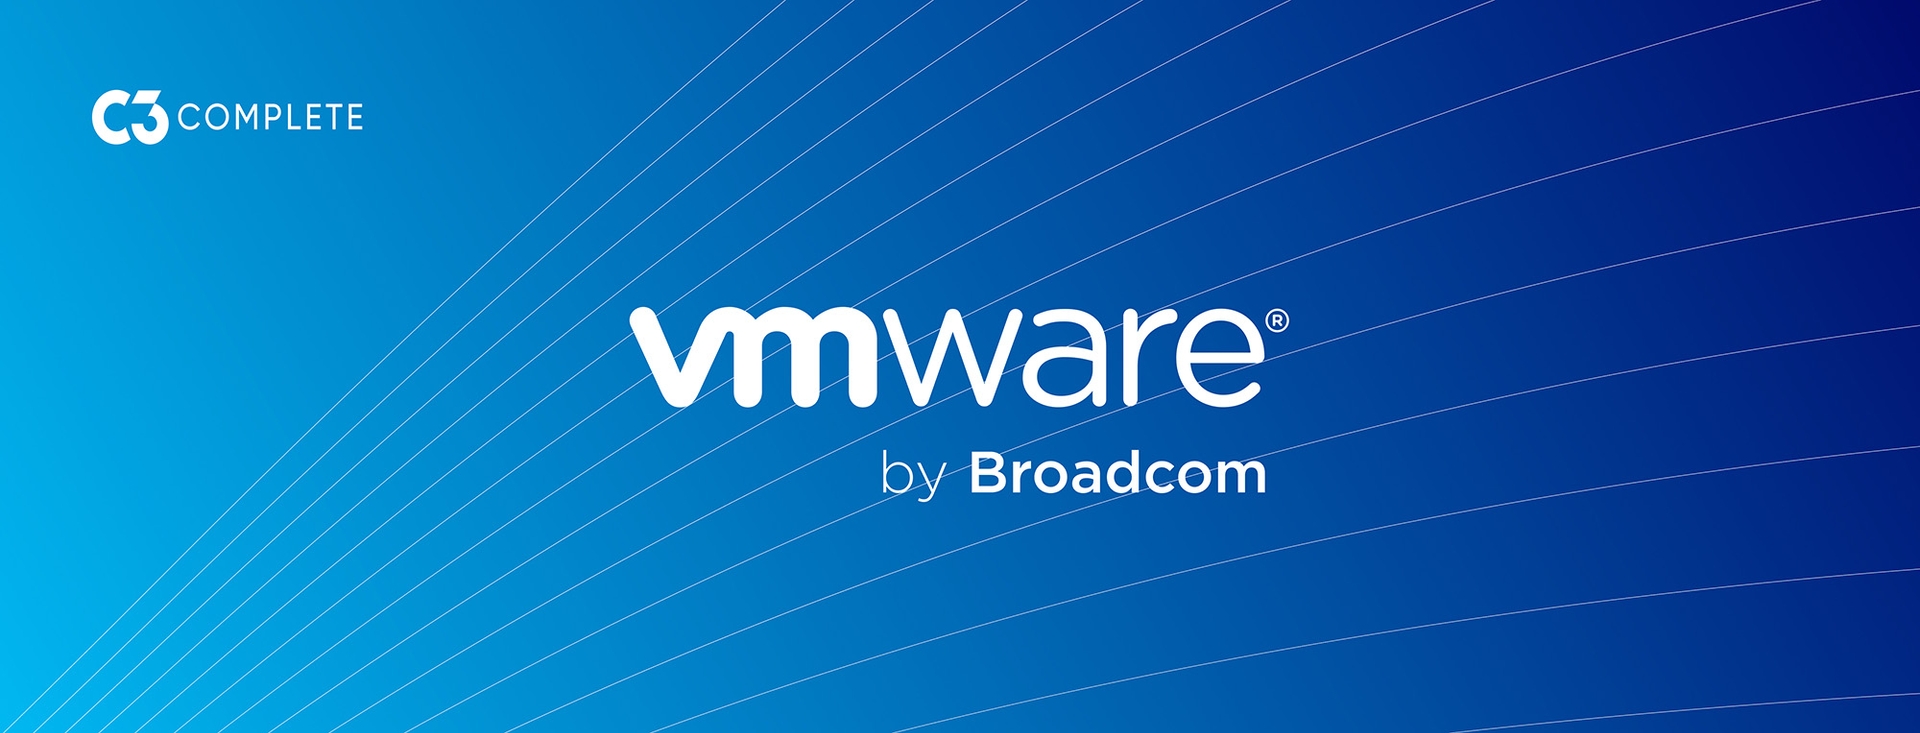 C3 Complete Joins Broadcom’s new VMware Premier VCSP Program